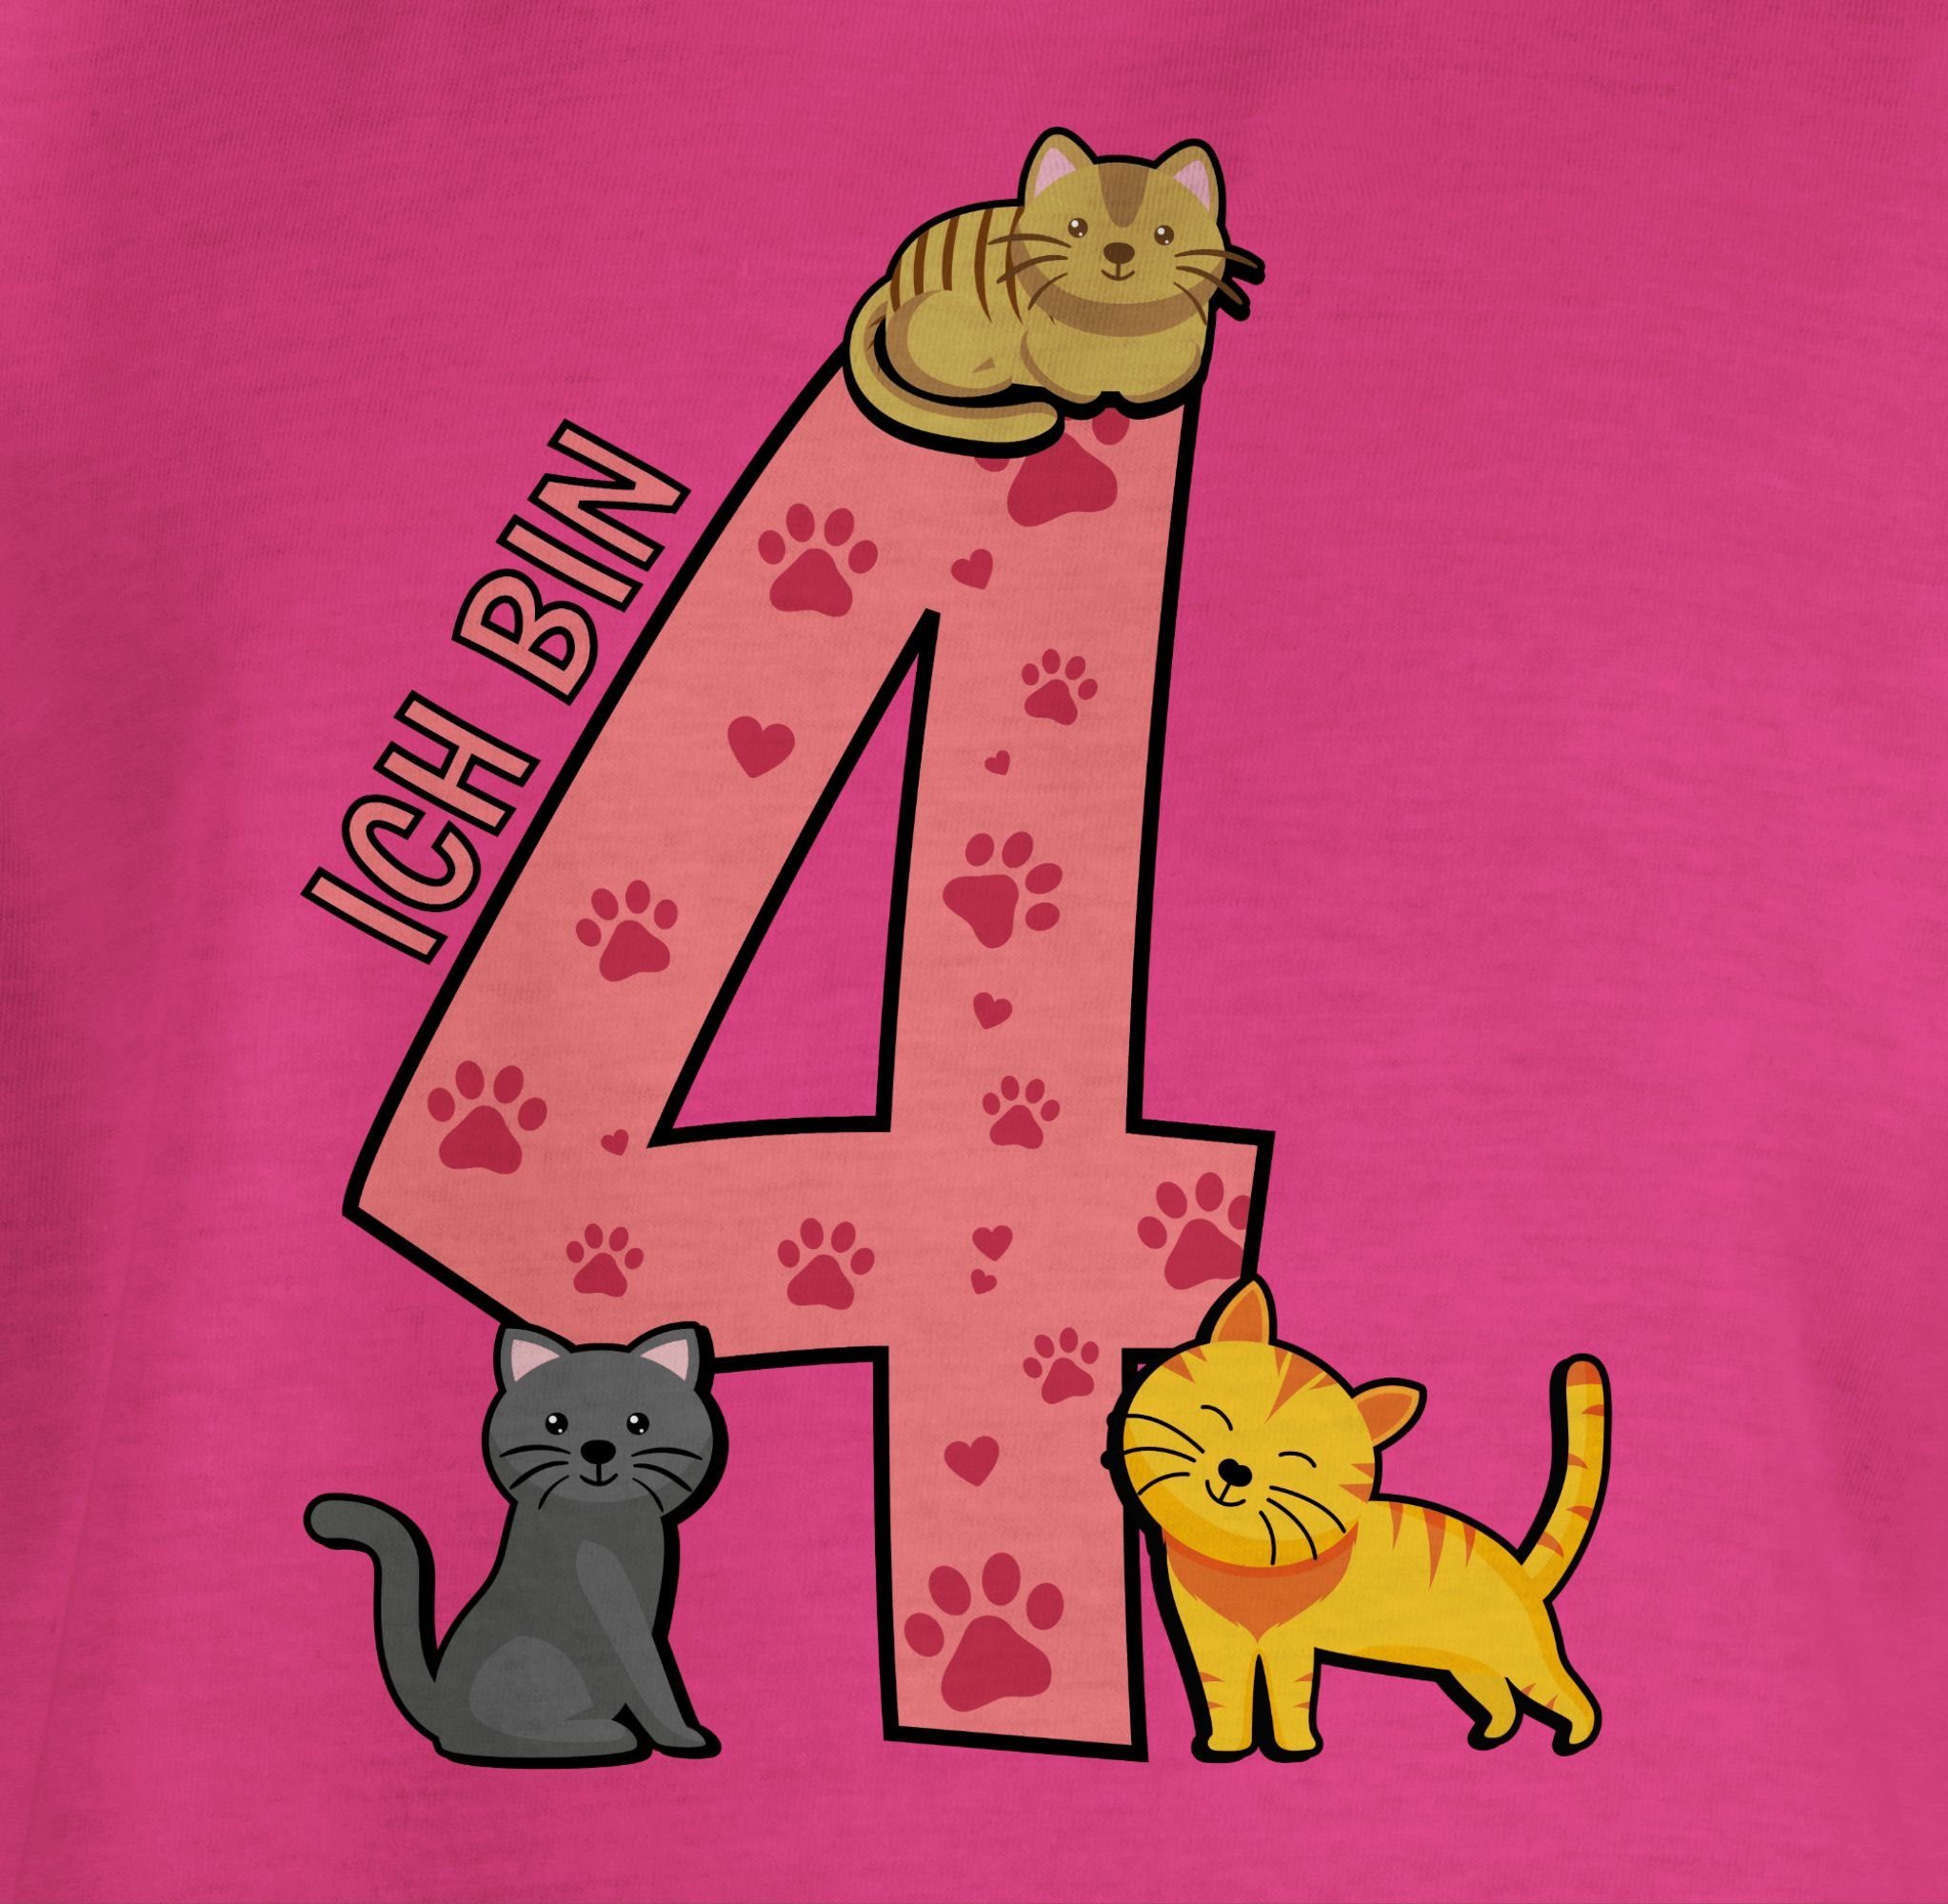 Vierter 4. Geburtstag Katzen Shirtracer 2 Fuchsia T-Shirt